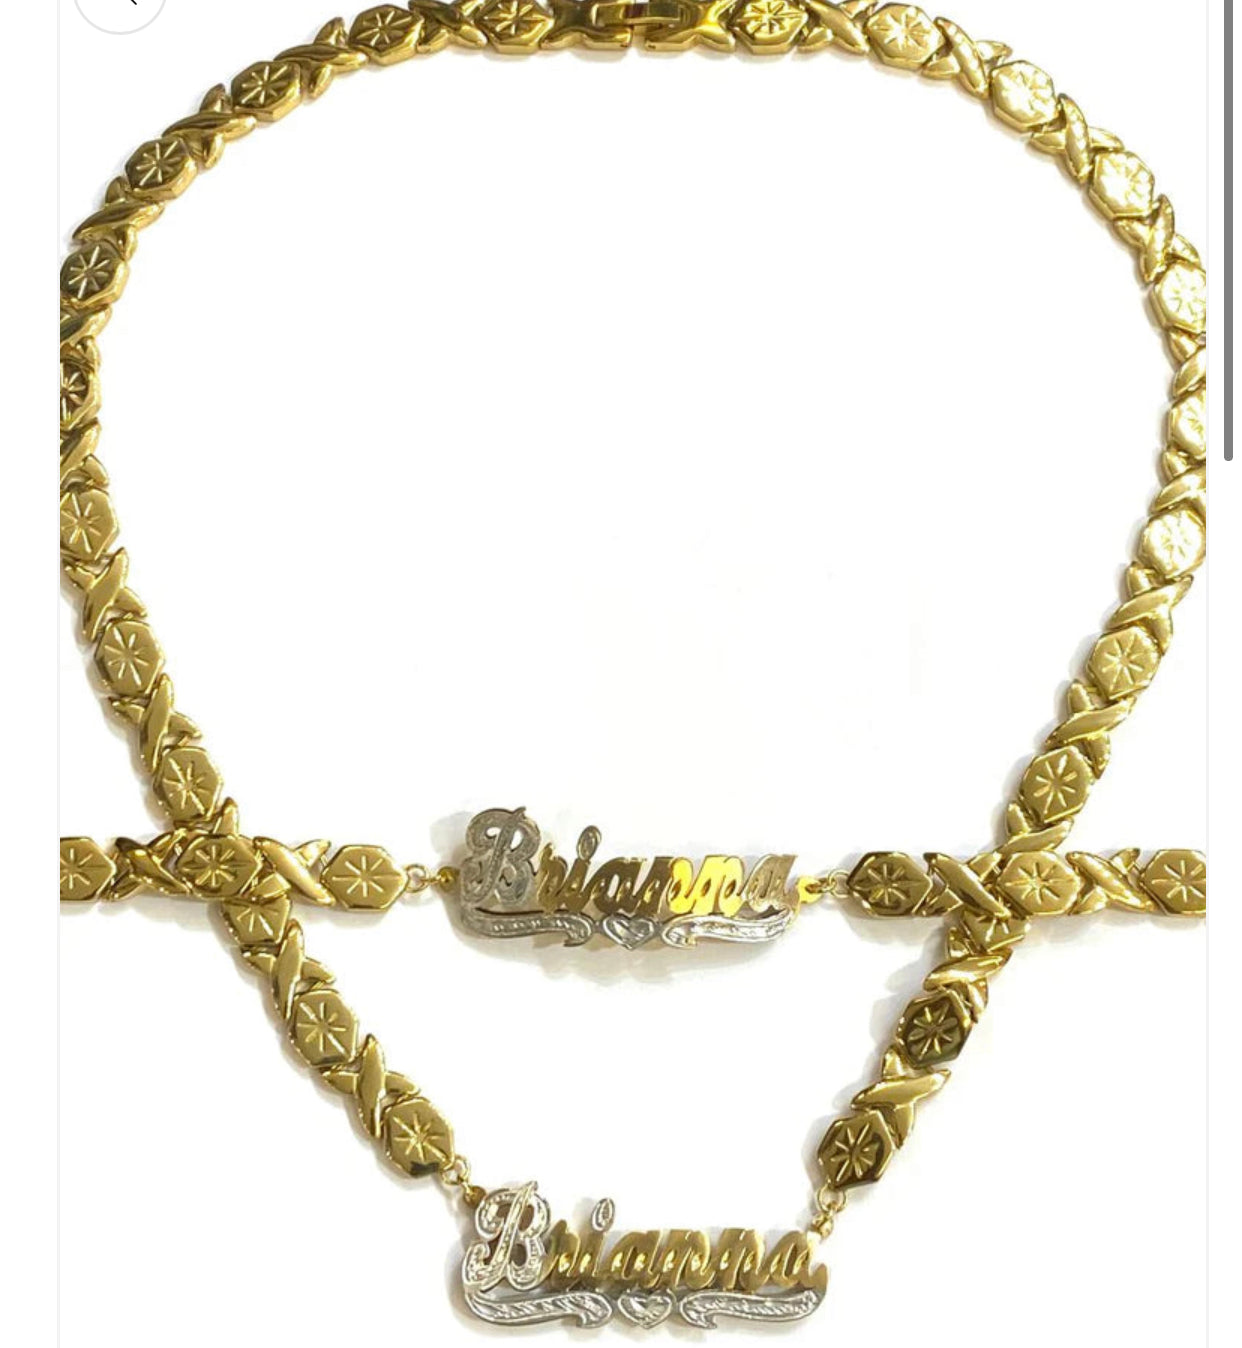 XOXO Personalized Necklace